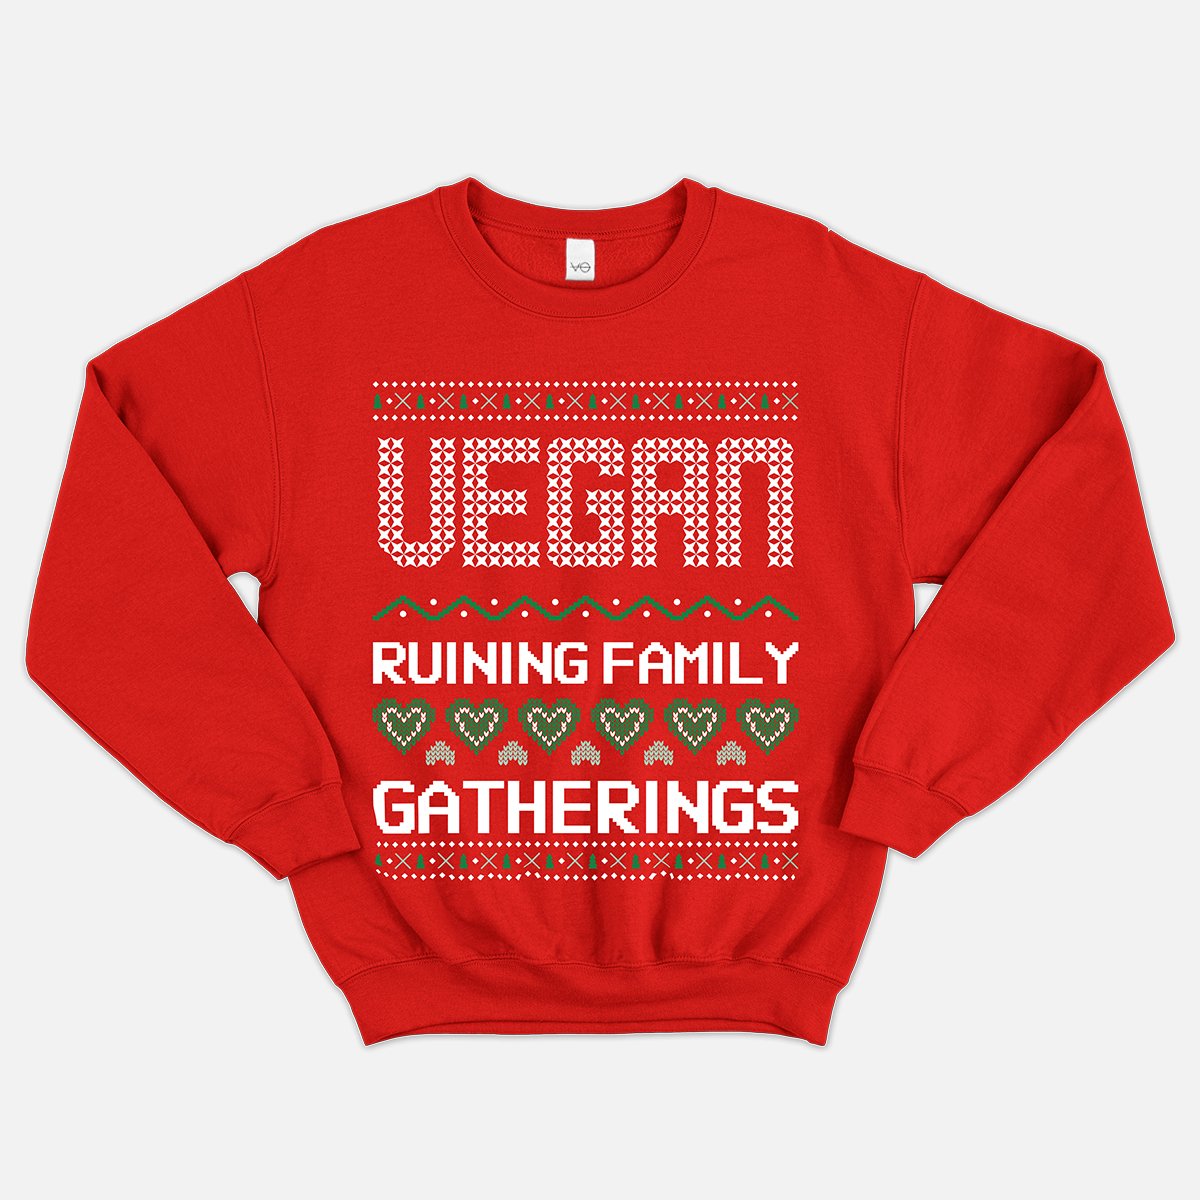 Vegan Ruining Family Gatherings Vegan Christmas Jumper (Unisex) product